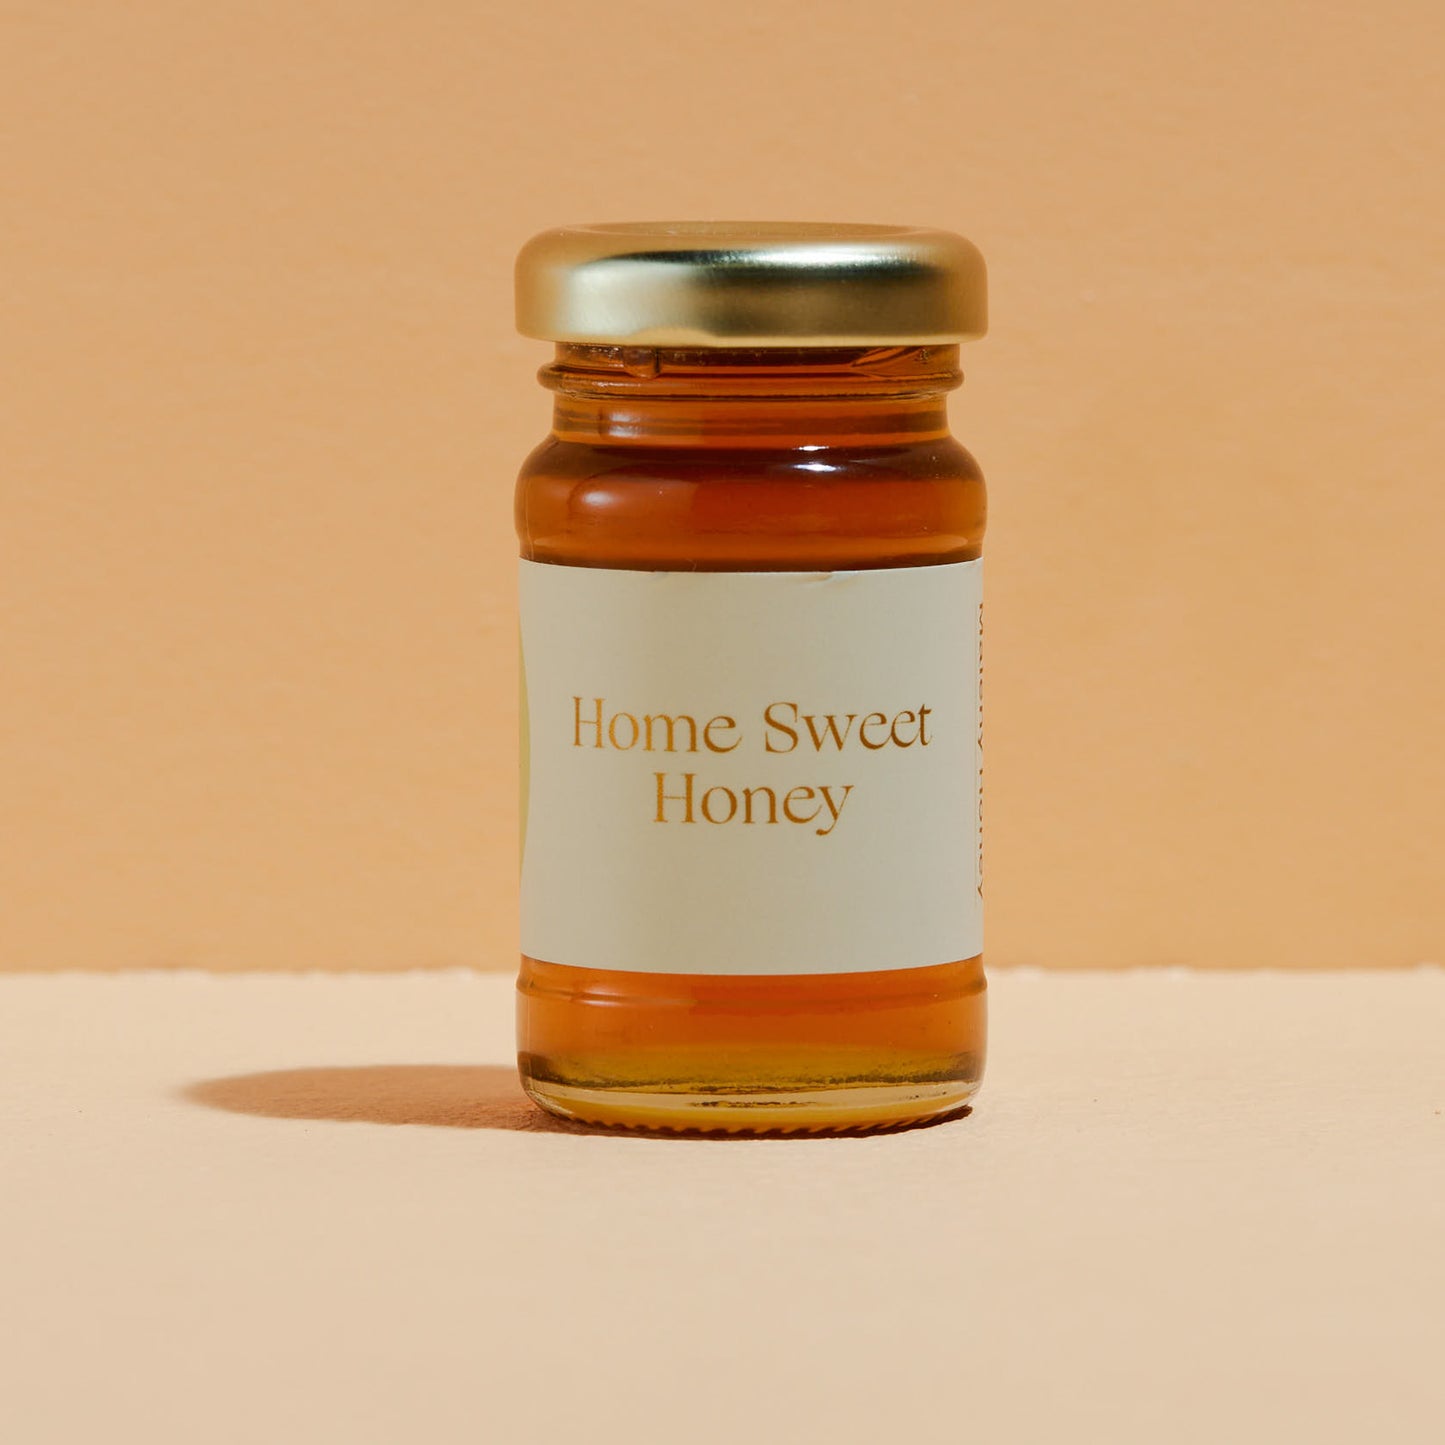 Maleny Honey Petite "Home Sweet Honey"